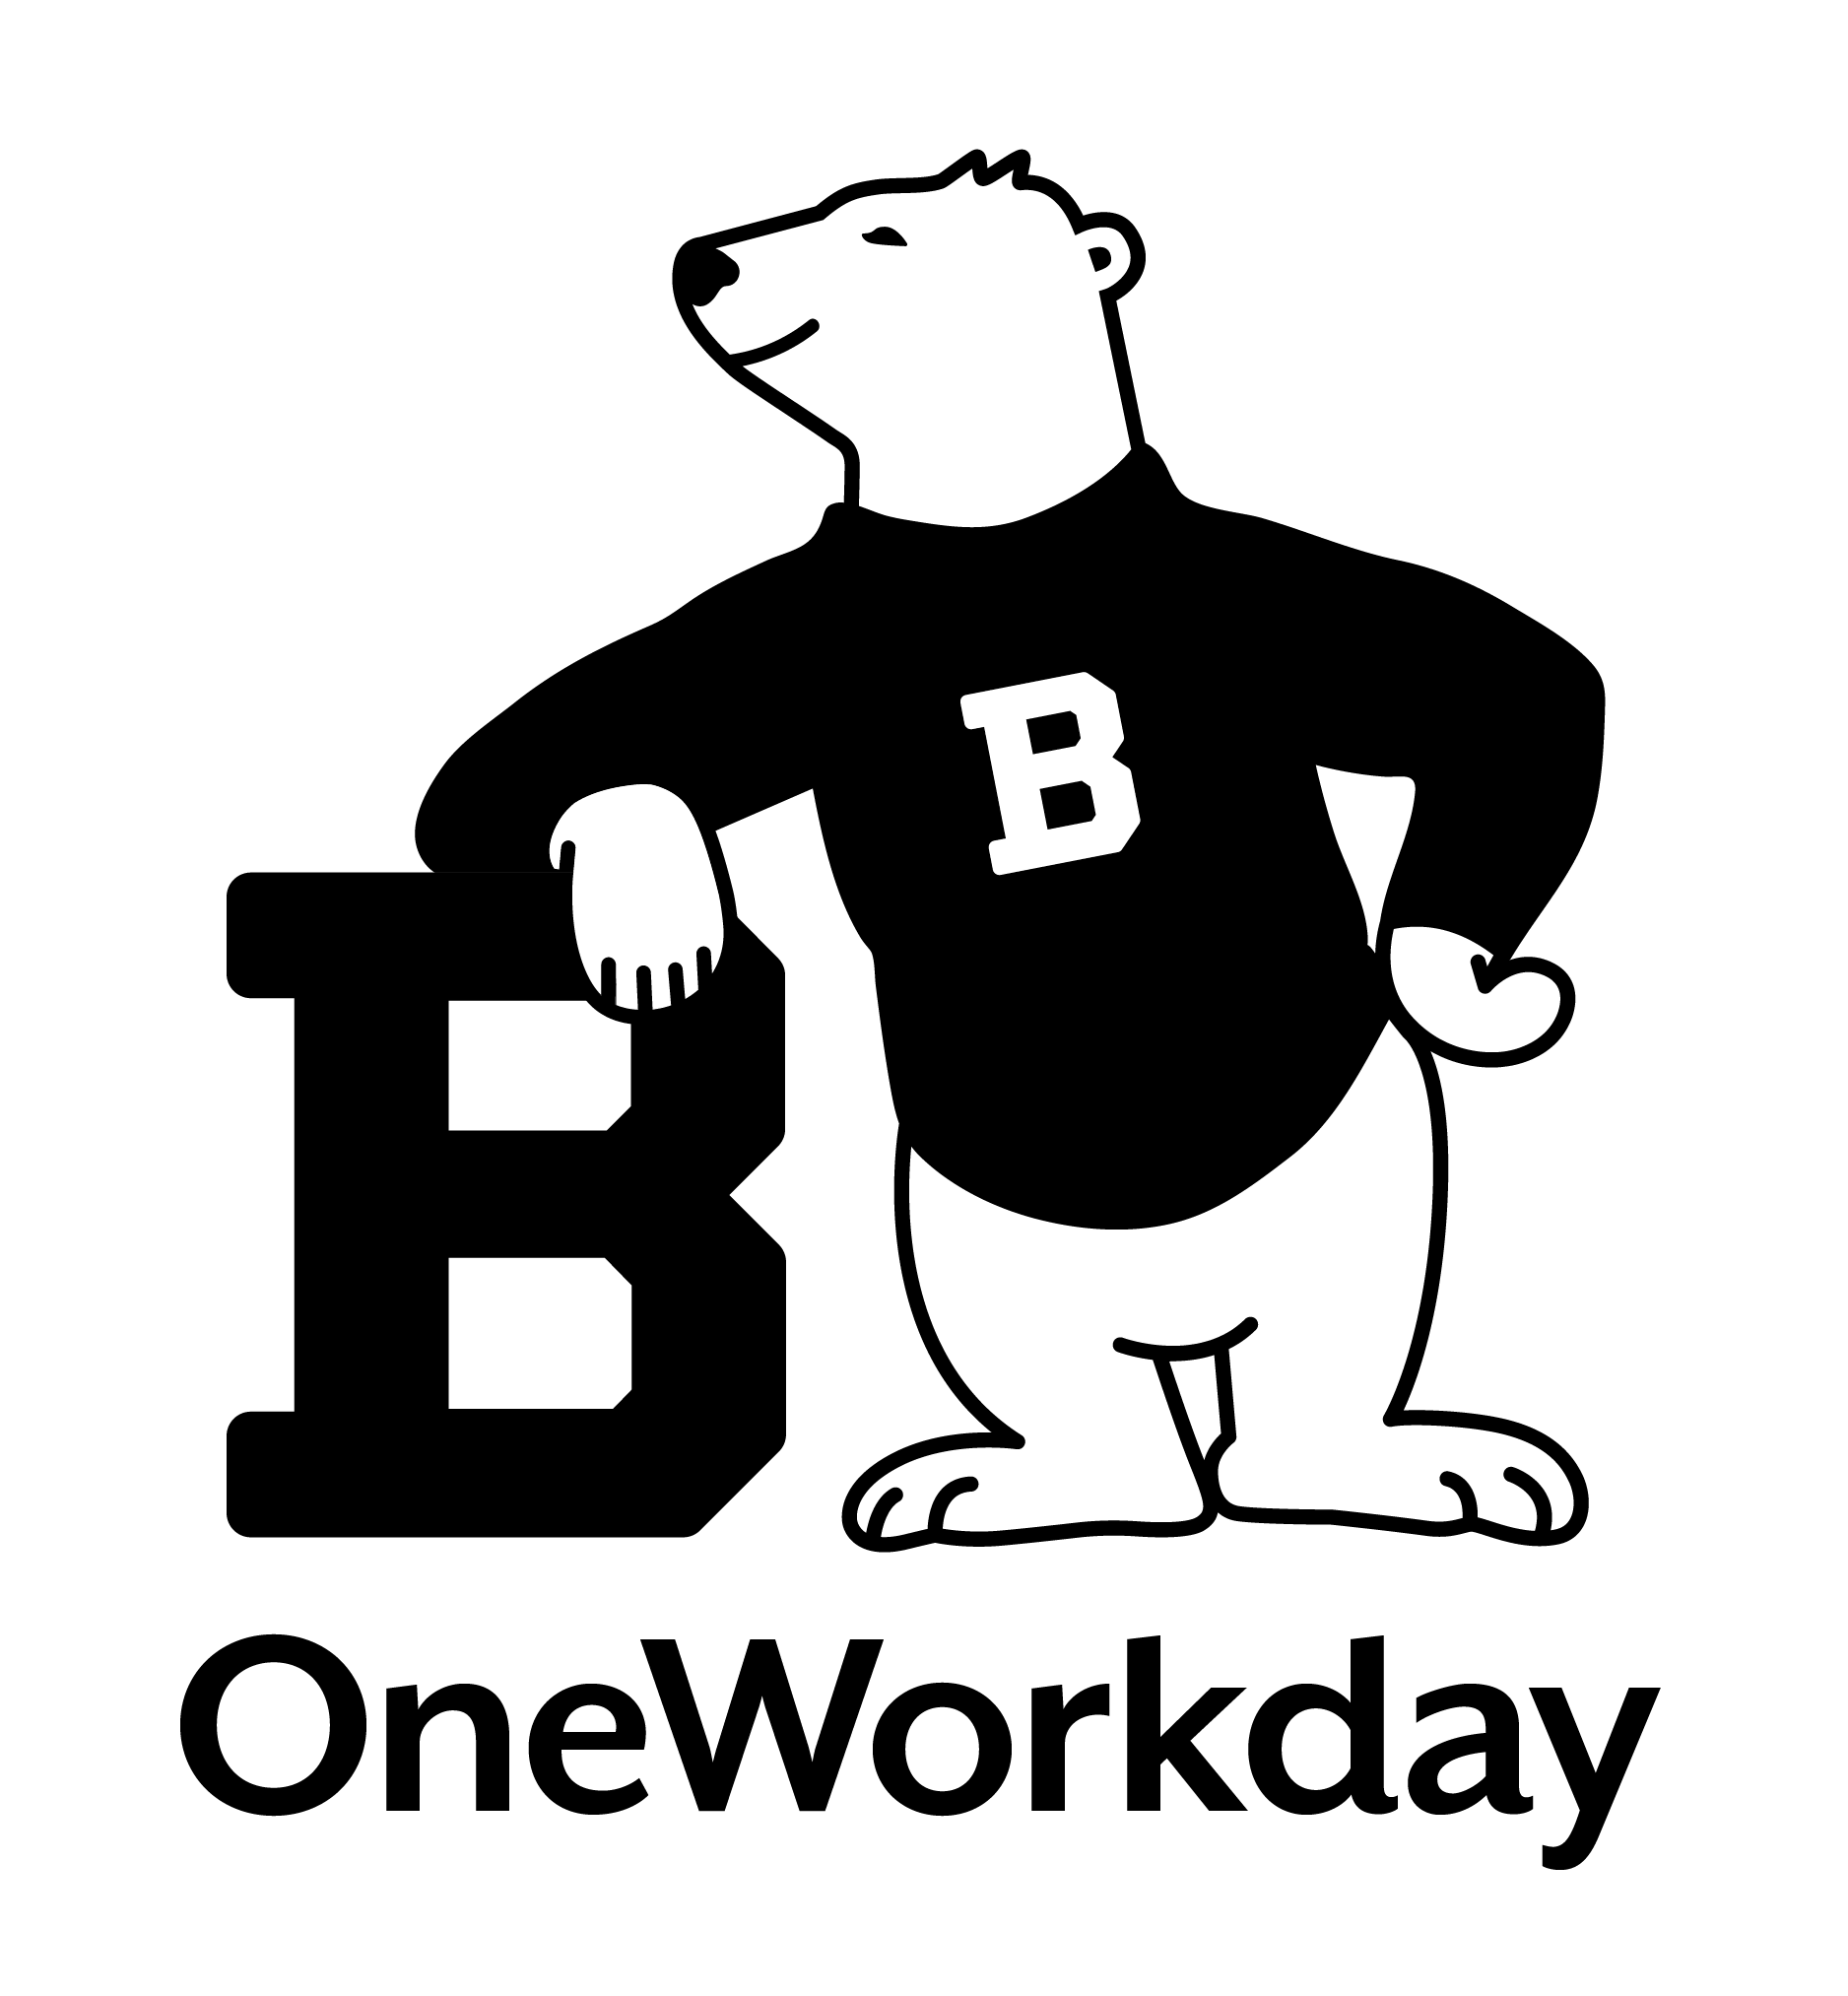 OneBowdoin logo